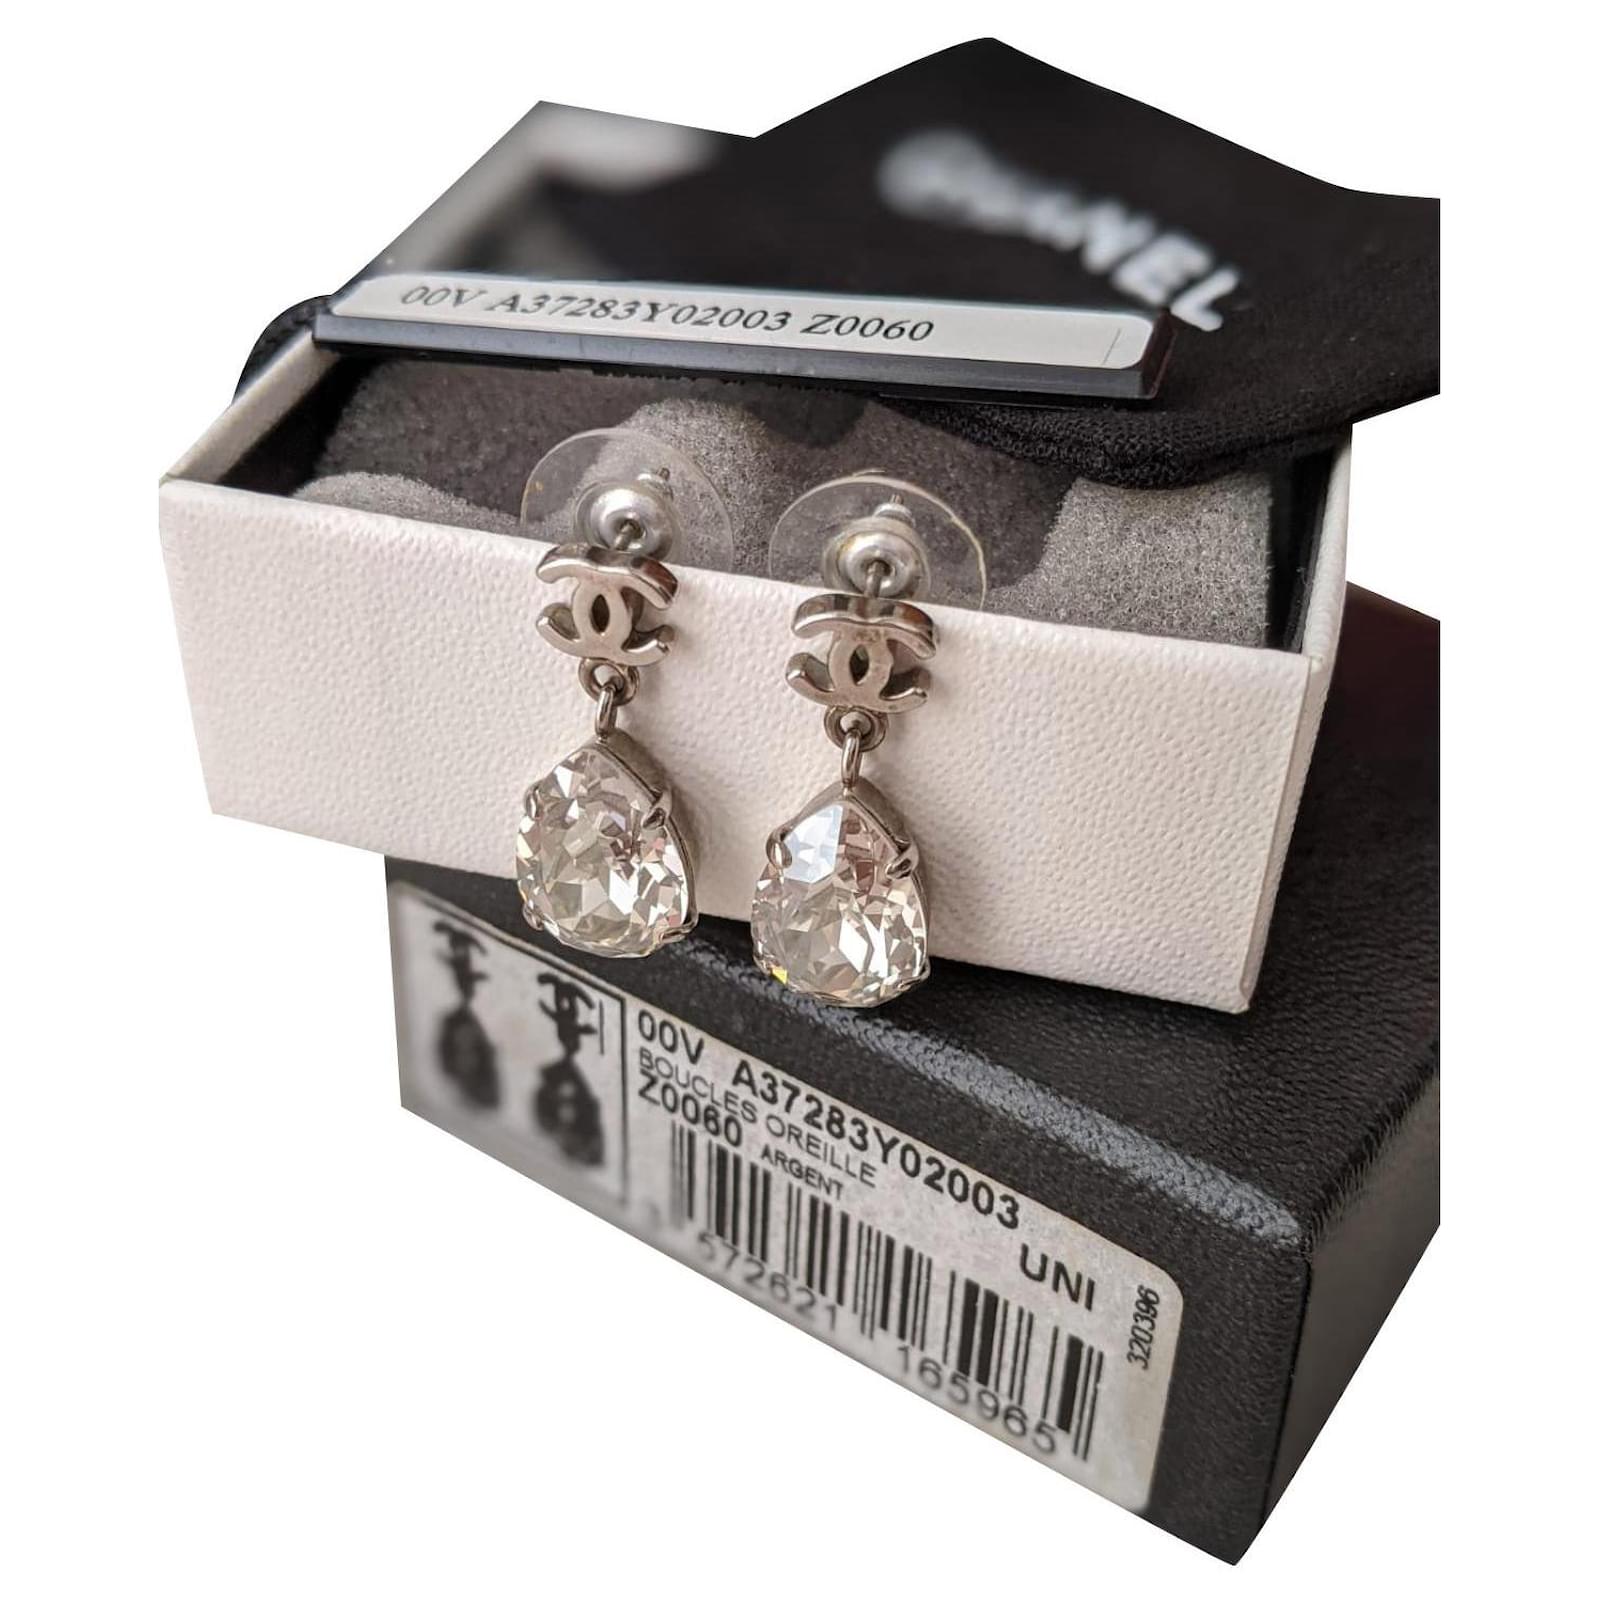 CHANEL, Jewelry, Chanel Gold Tone Metal Faux Pearl Crystal Pink Bead Cc  Heart Drop Earrings